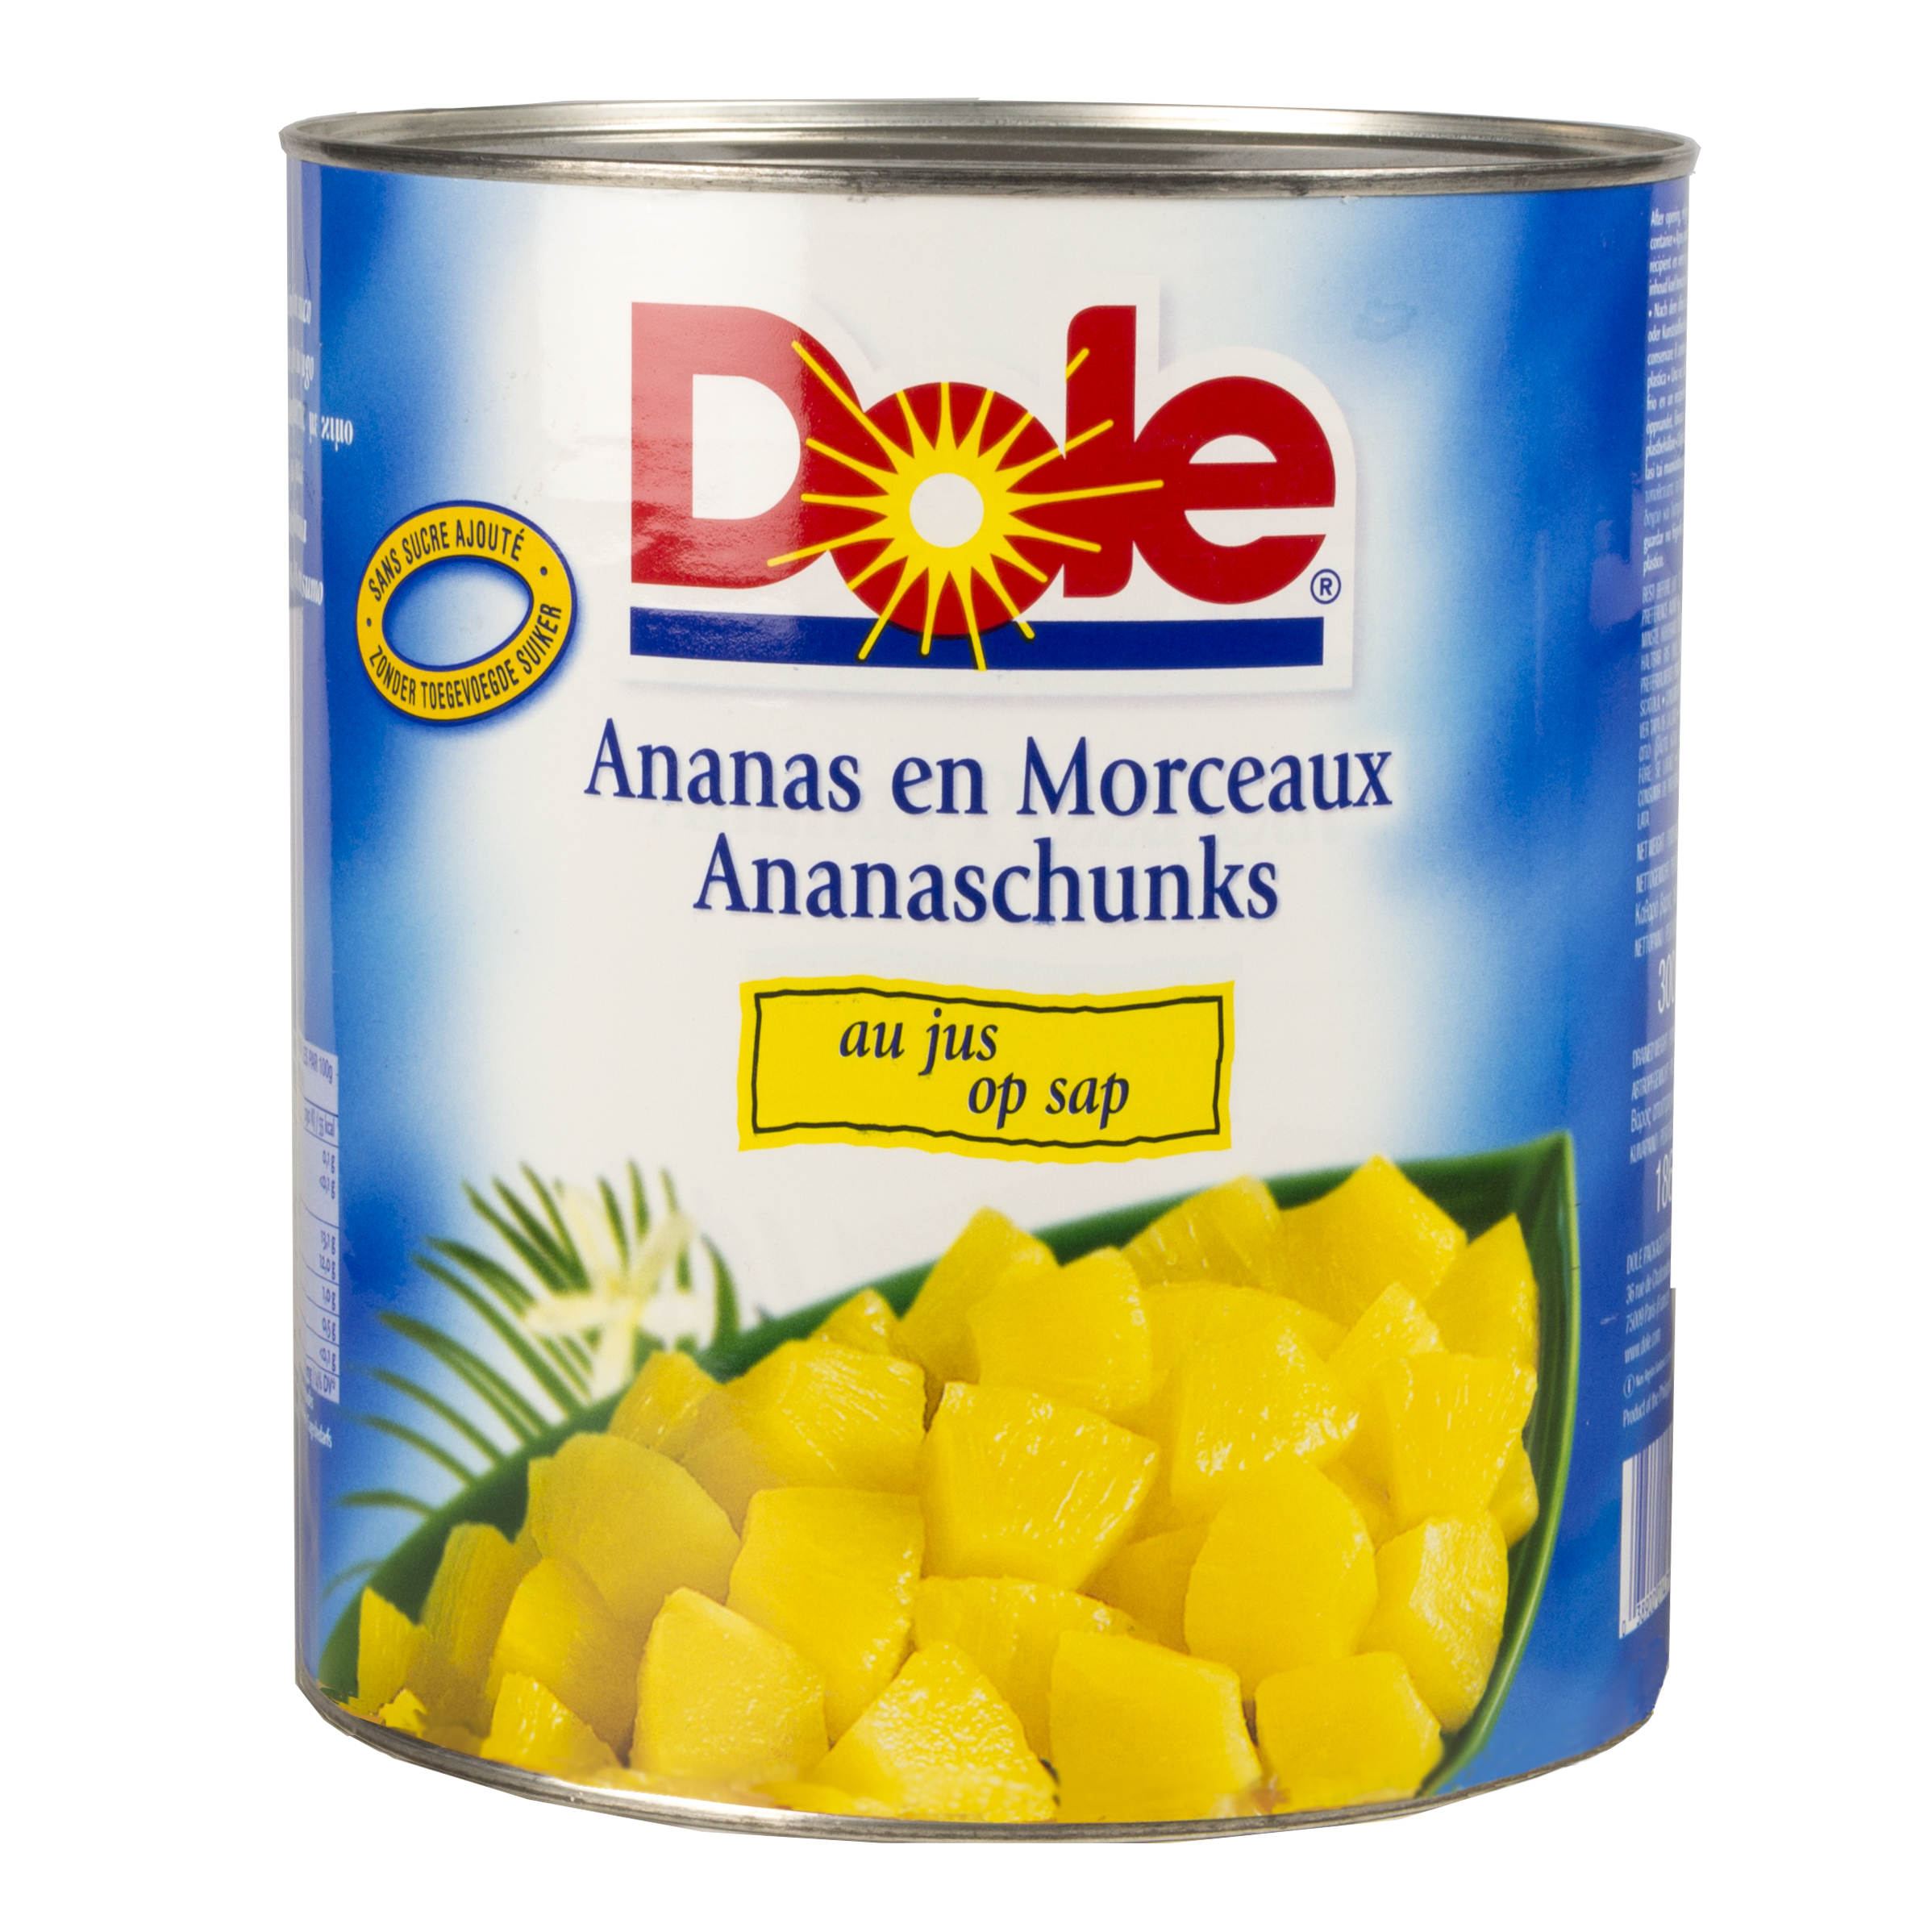 702 Ananas chunks 1x3 ltr